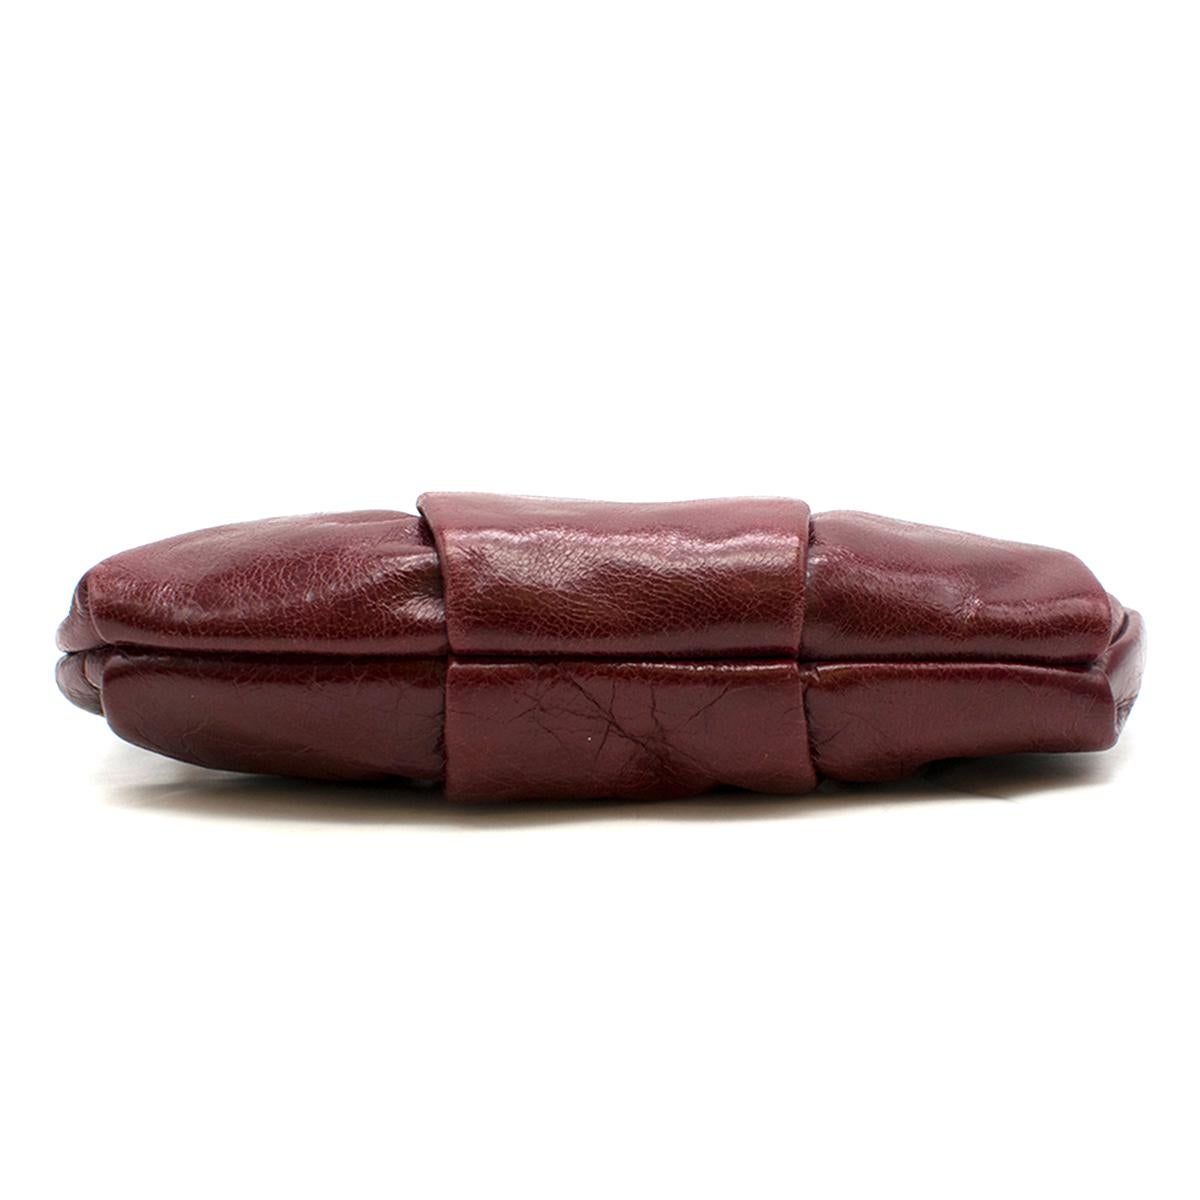 Brown Prada burgundy leather wristlet clutch